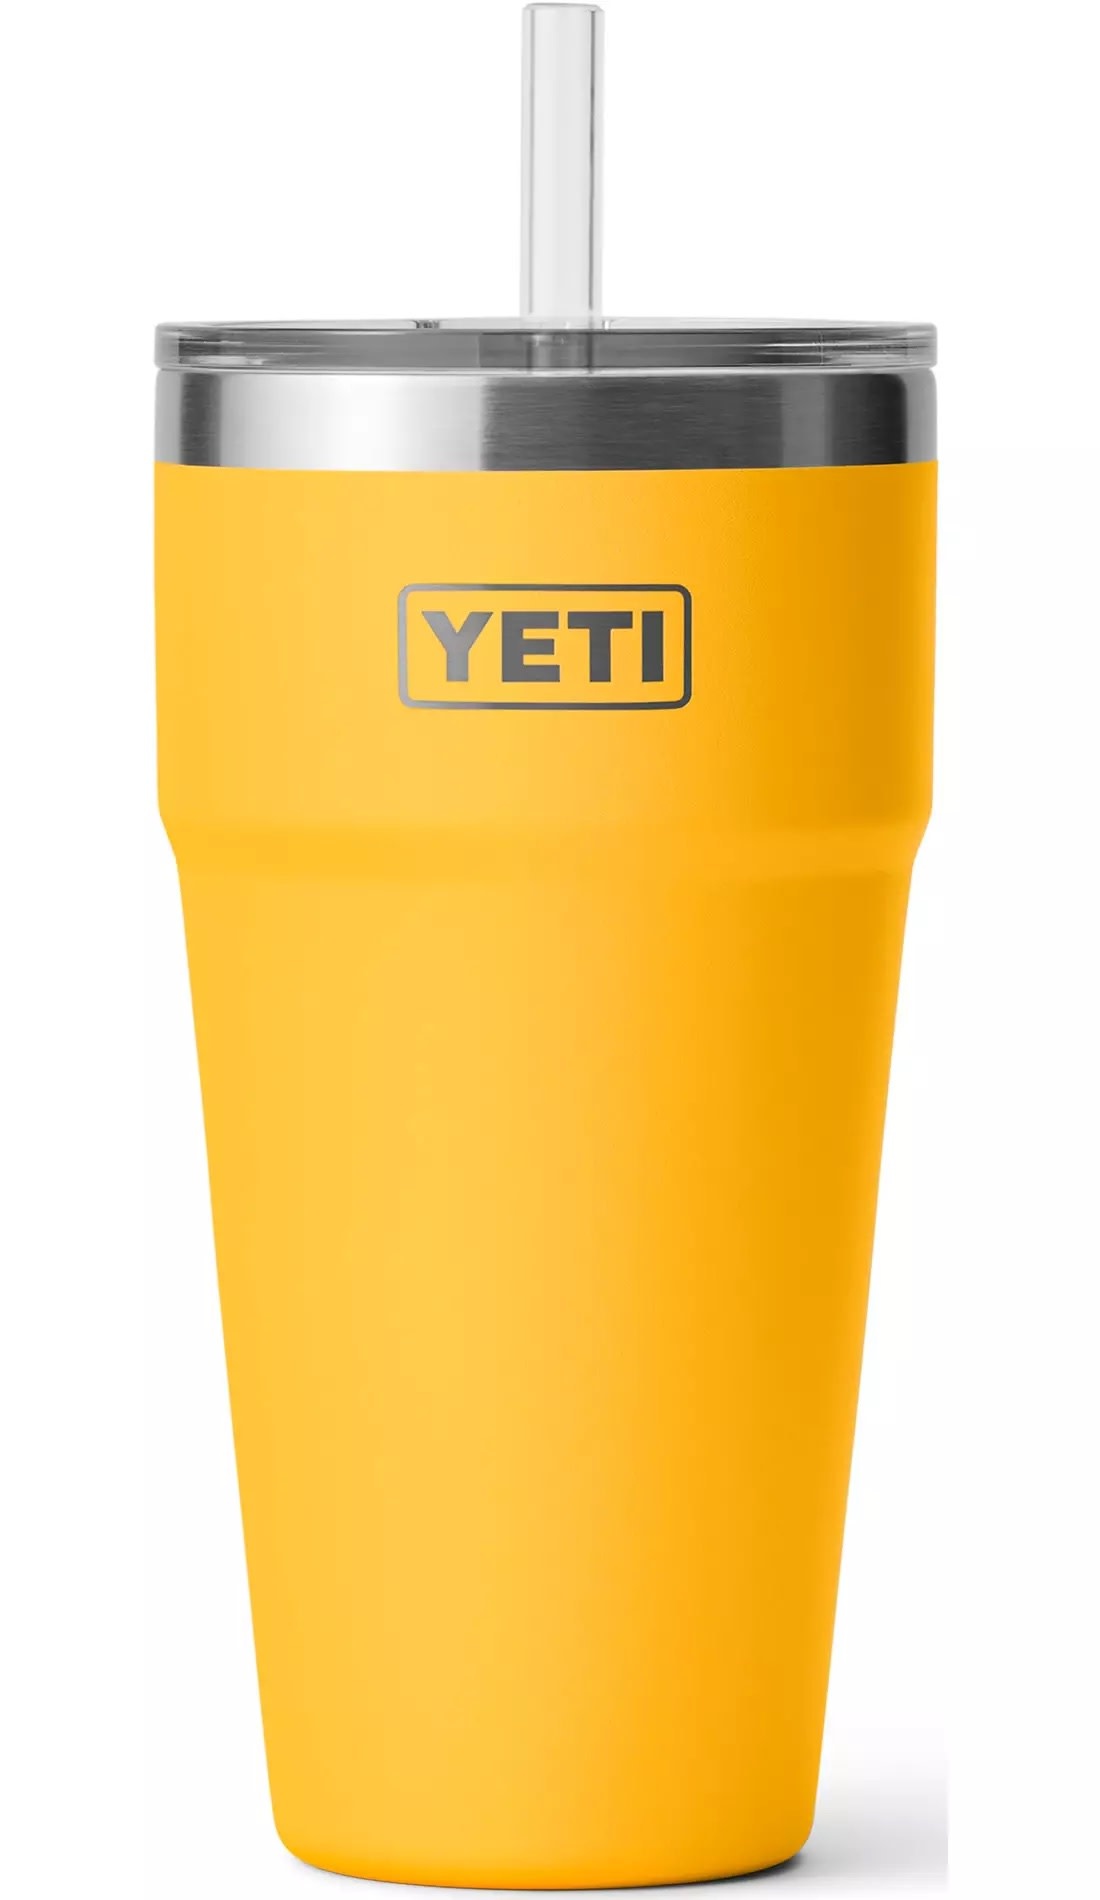 Introducing the YETI Rambler 26oz Cup 